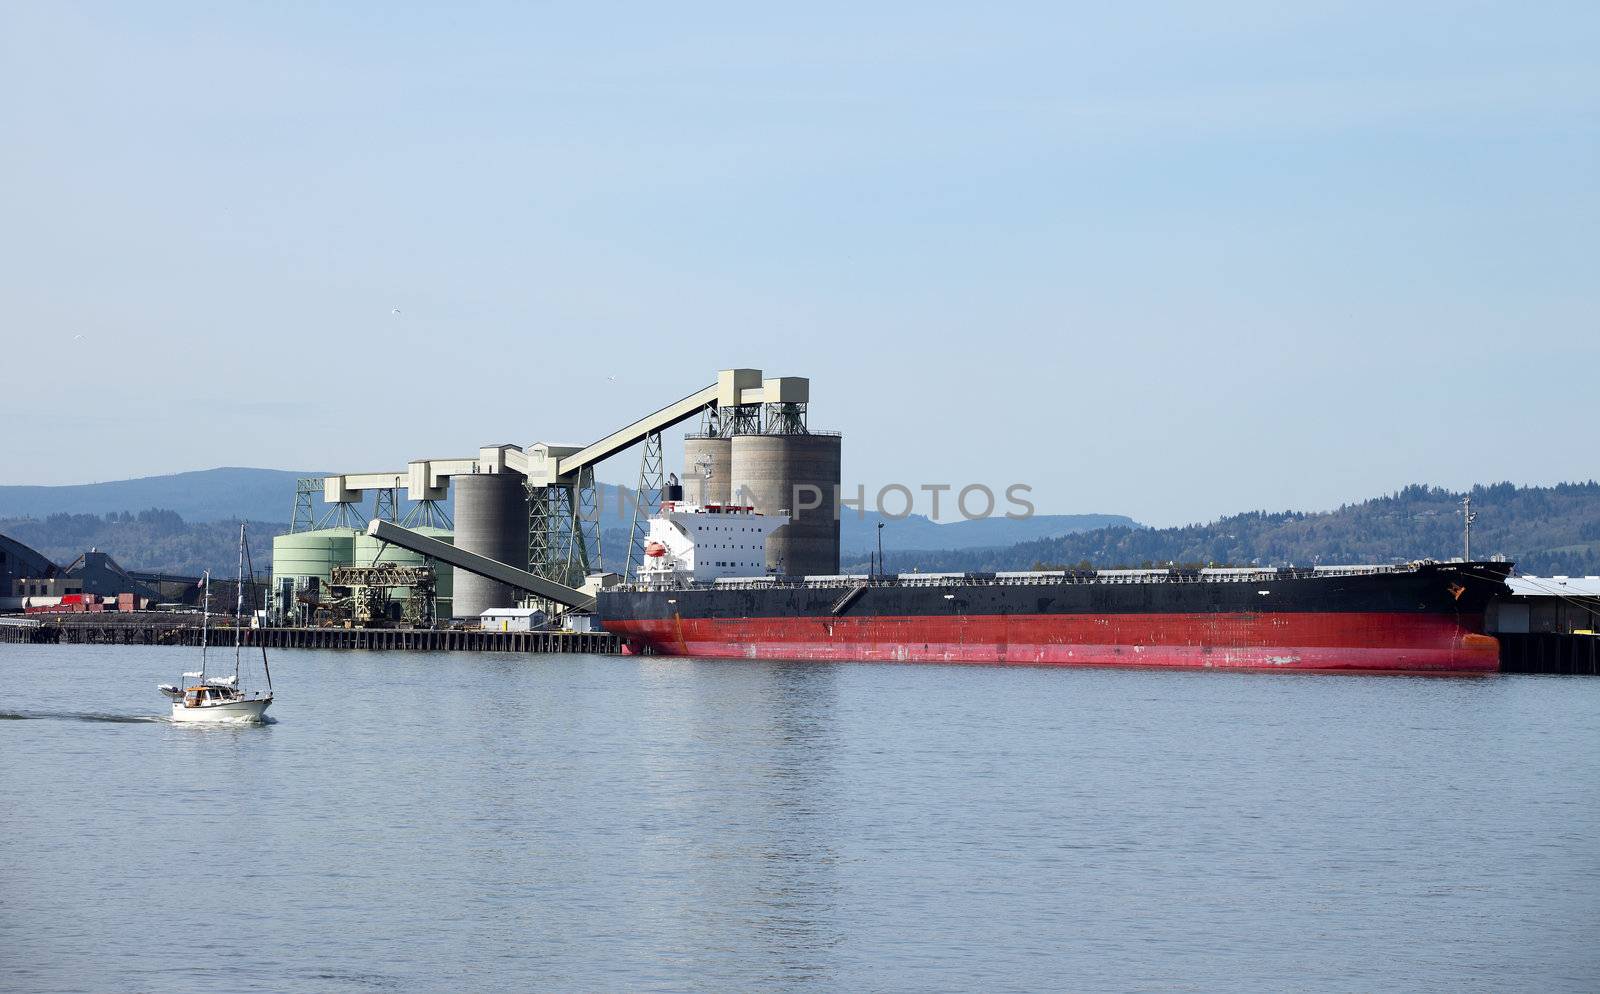 Cargo ship & the port of Longview WA. by Rigucci